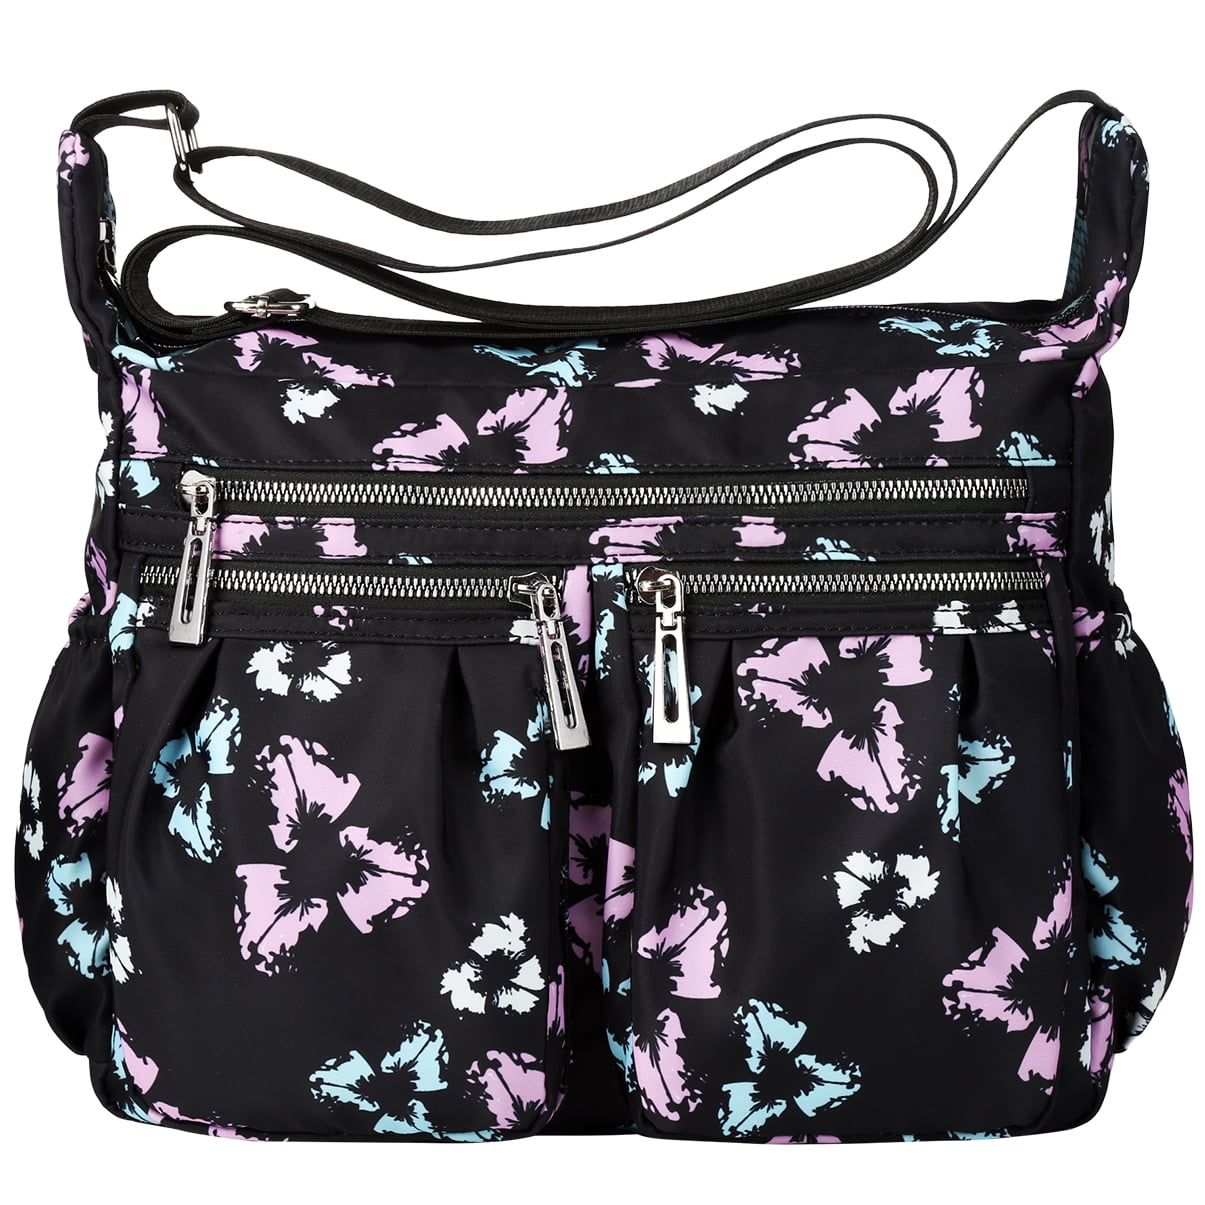 Vbiger Women Shoulder Bags Cross Body Bag Handbags Tote Bag with Adjustable Handles